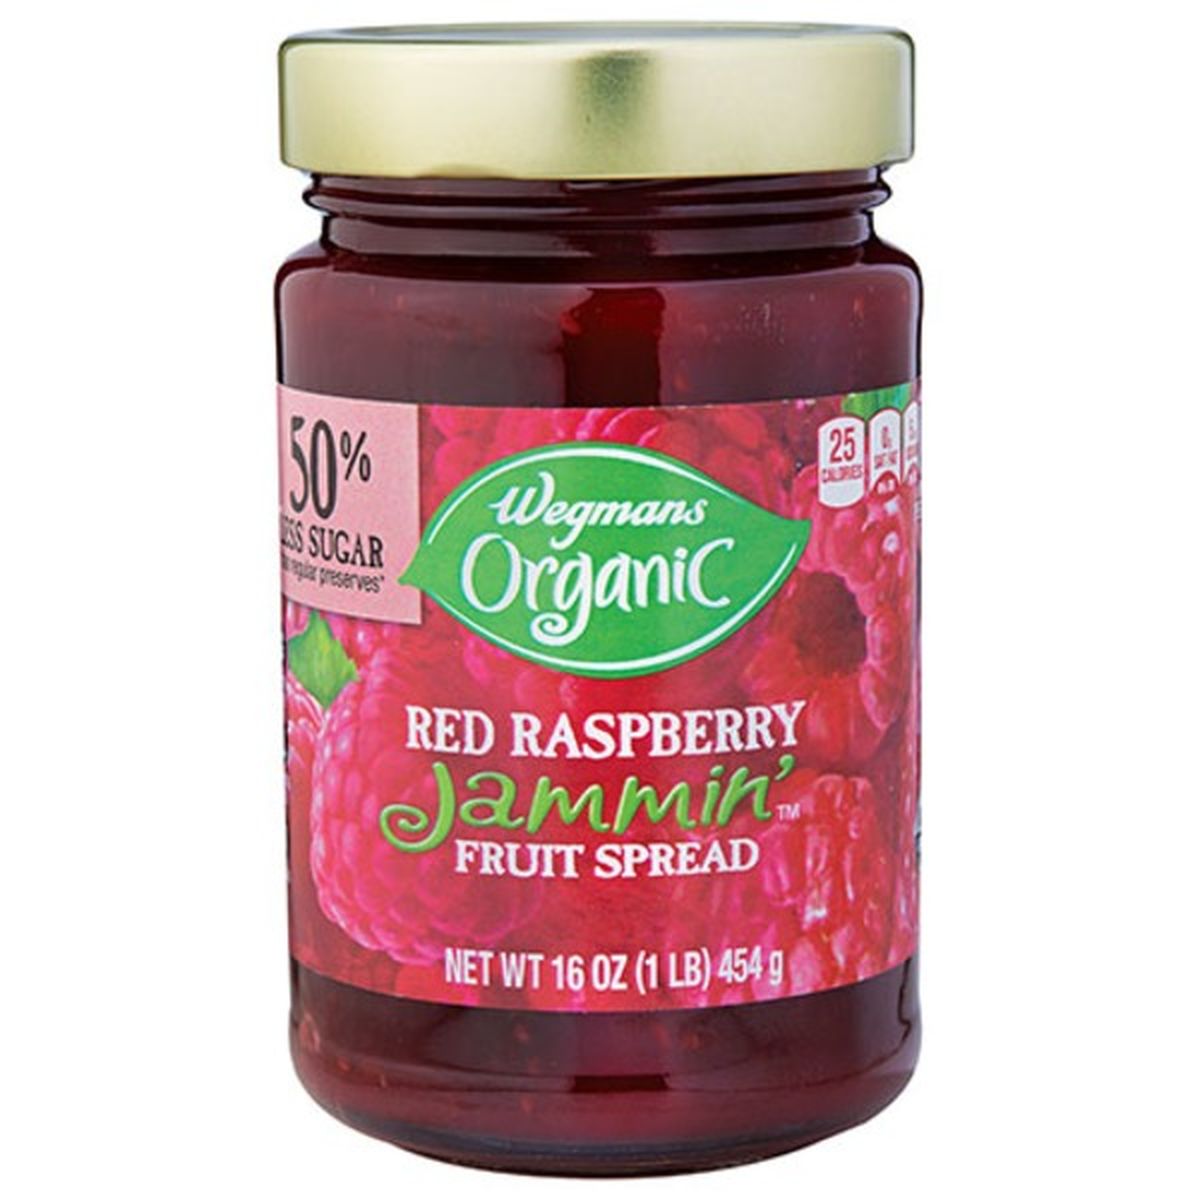 Calories in Wegmans Organic Red Raspberry Jammin' Fruit Spread